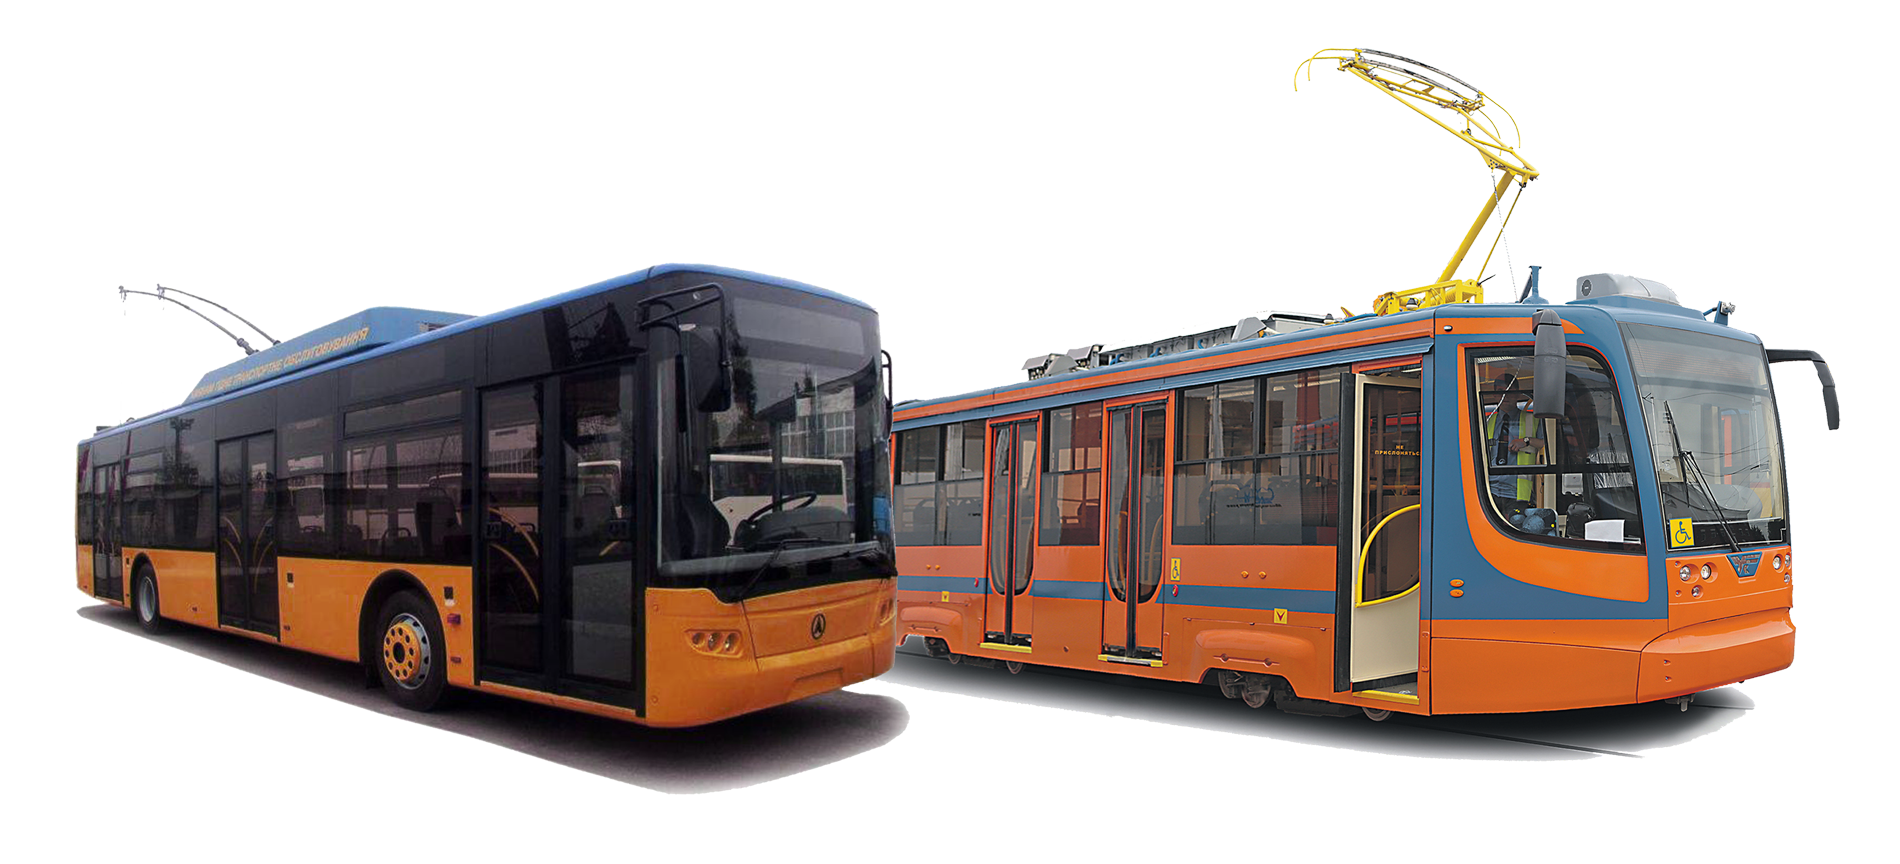 Установить транспорт на телефоне. Трамвай и троллейбус. Троллейбус на белом фоне. Современный трамвай. Троллейбус без фона.